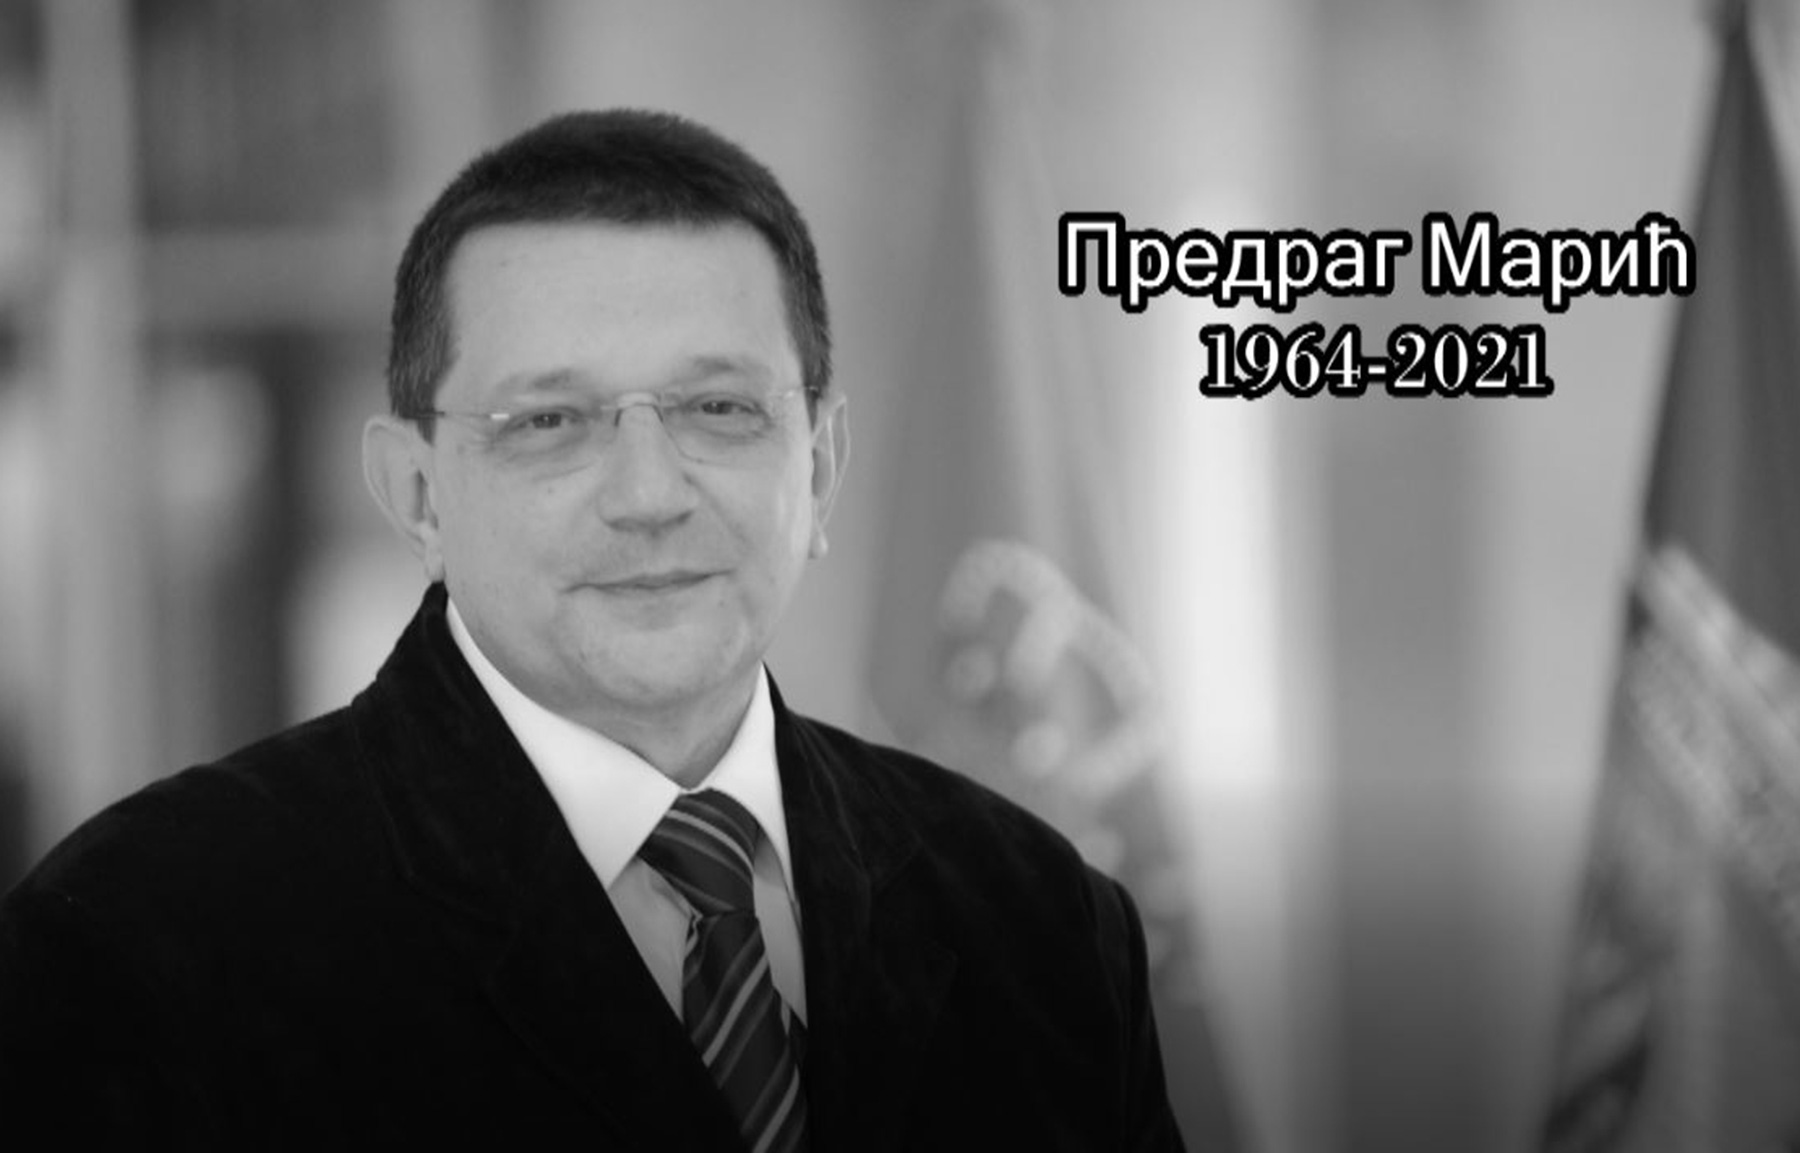 Preminuo Predrag Marić, doskorašnji pomoćnik ministra i načelnik Sektora za vanredne situacije Predrag Marić